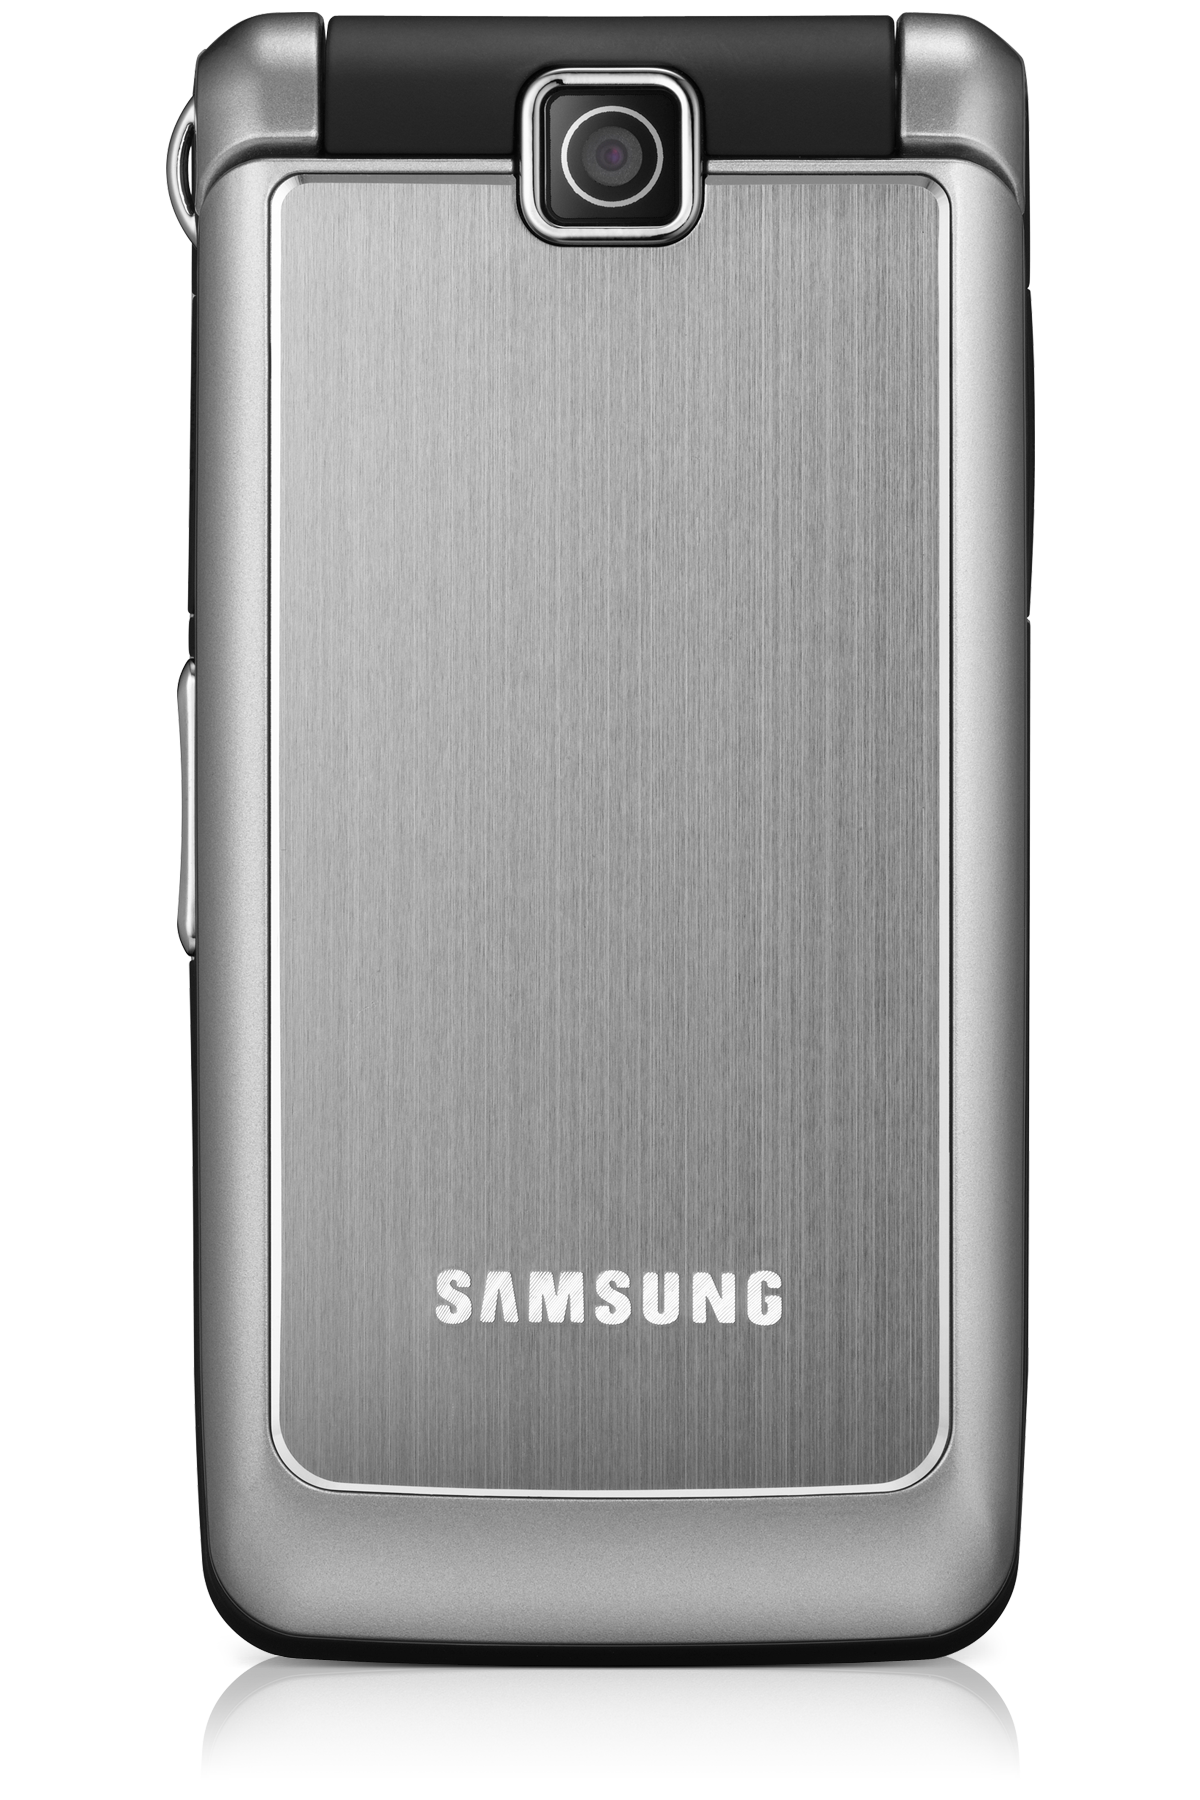 Samsung S3600 | Samsung Support Caribbean